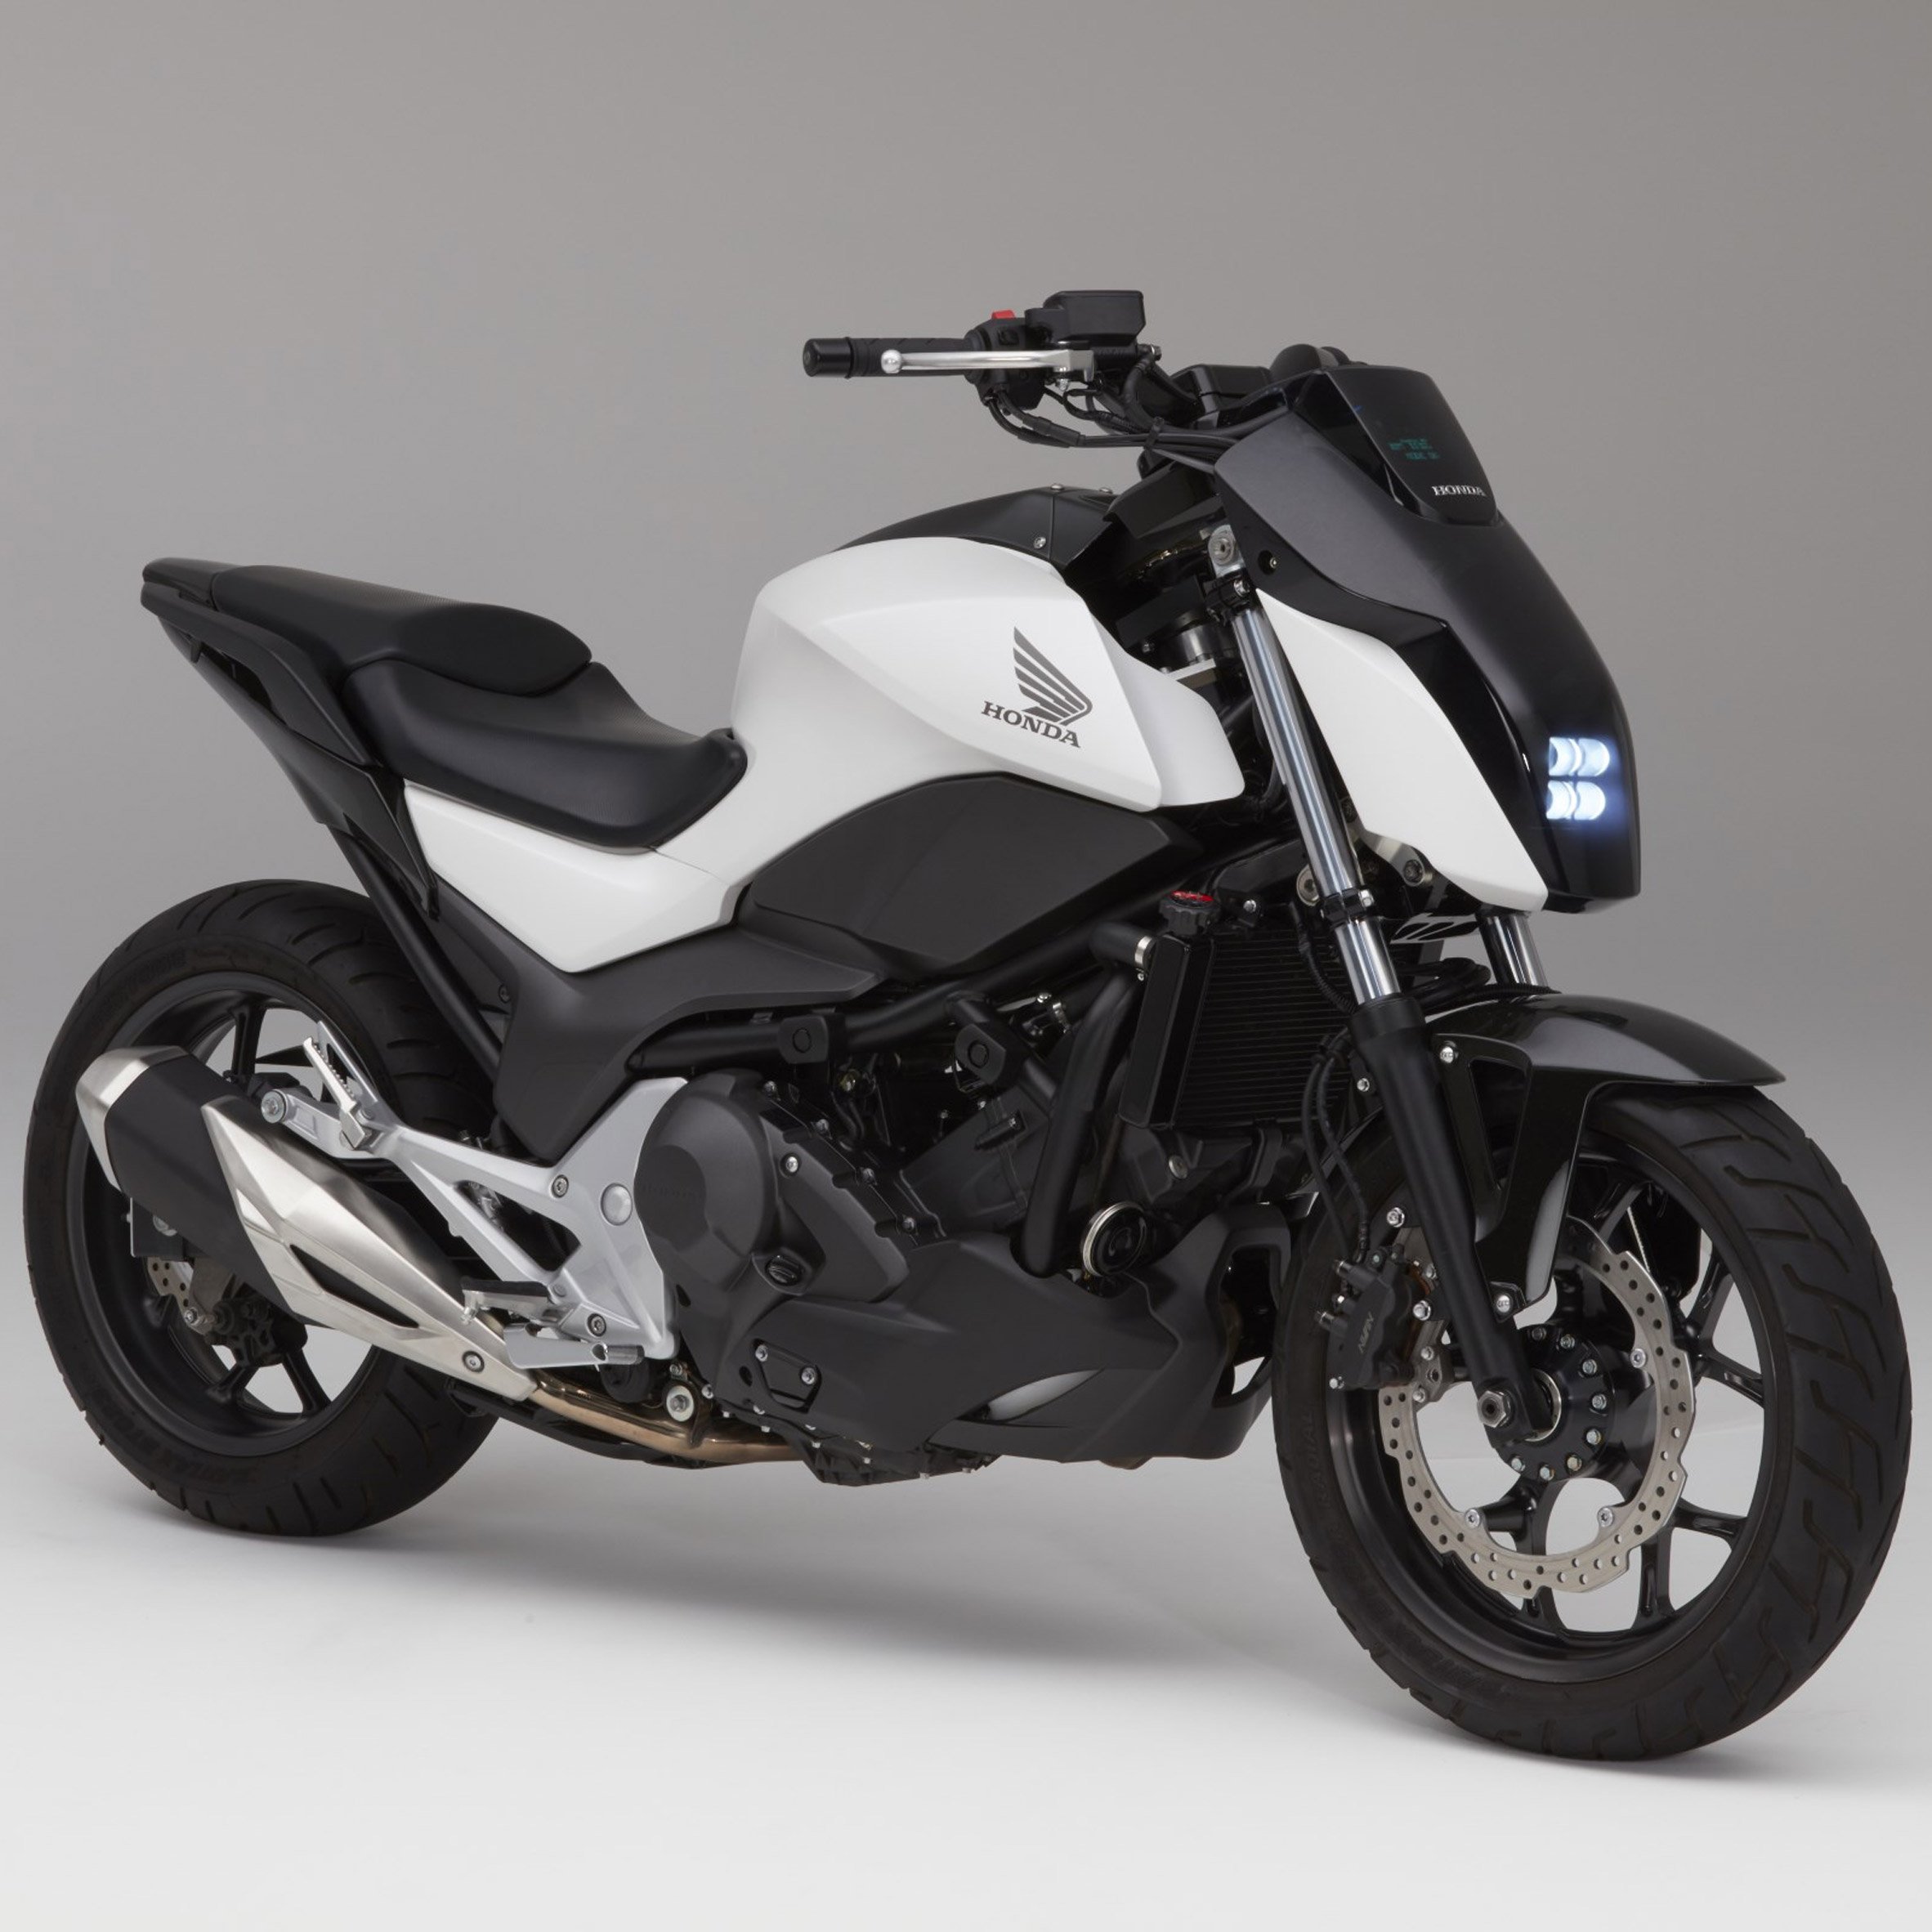 miljøforkæmper fjer repulsion Honda unveils self-balancing motorcycle that can drive itself